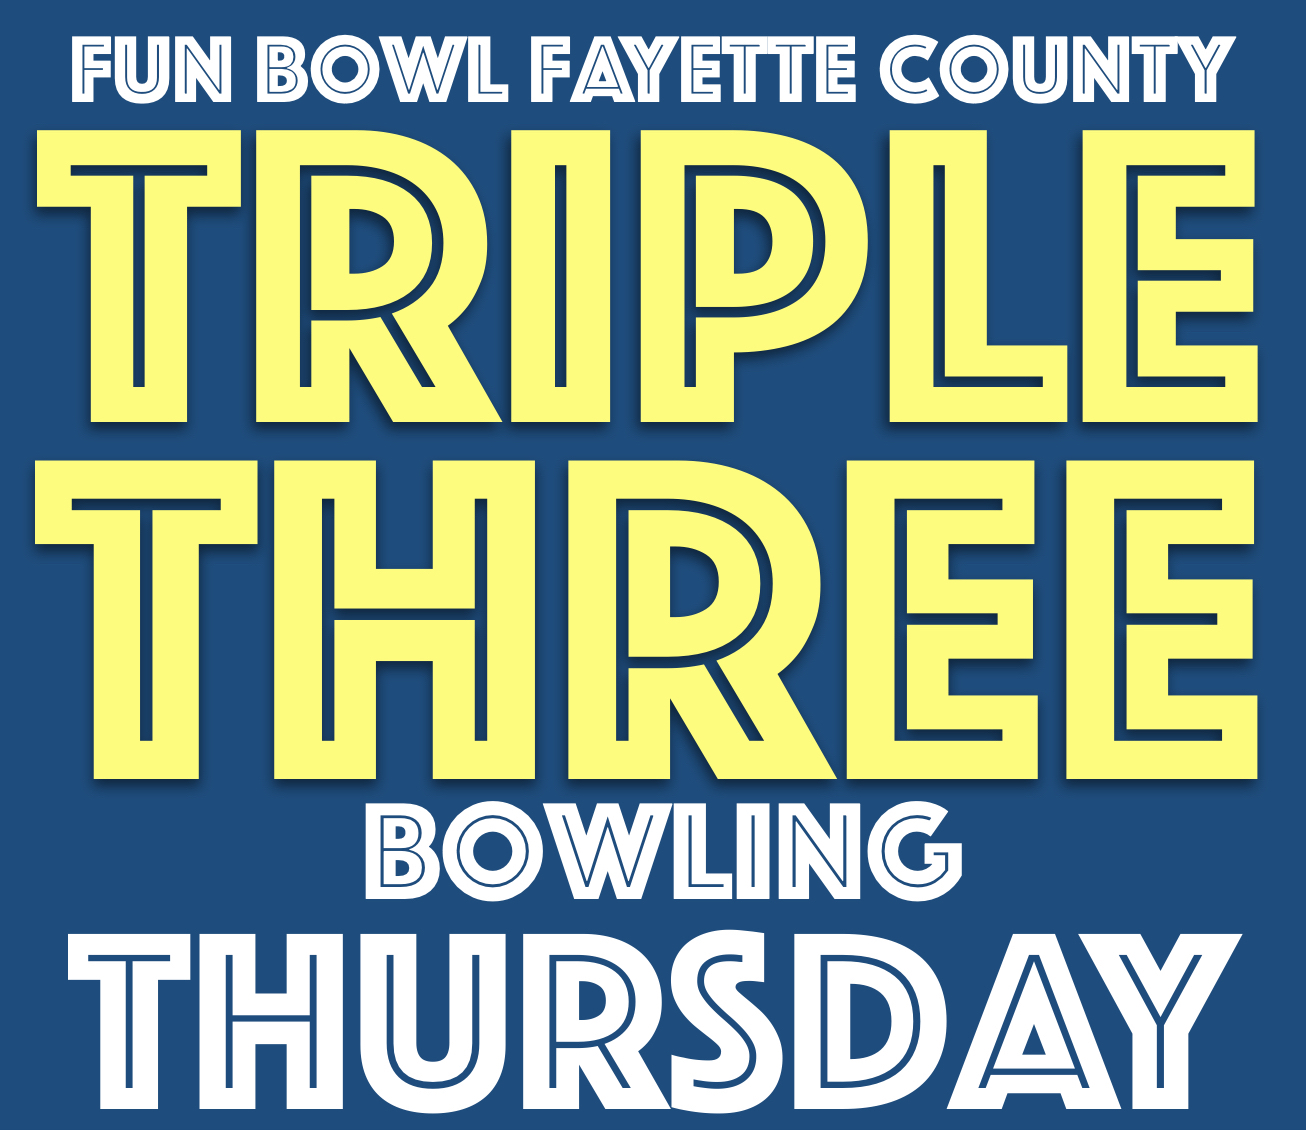 Fun Bowl Fayette County Triple Three Thursdays